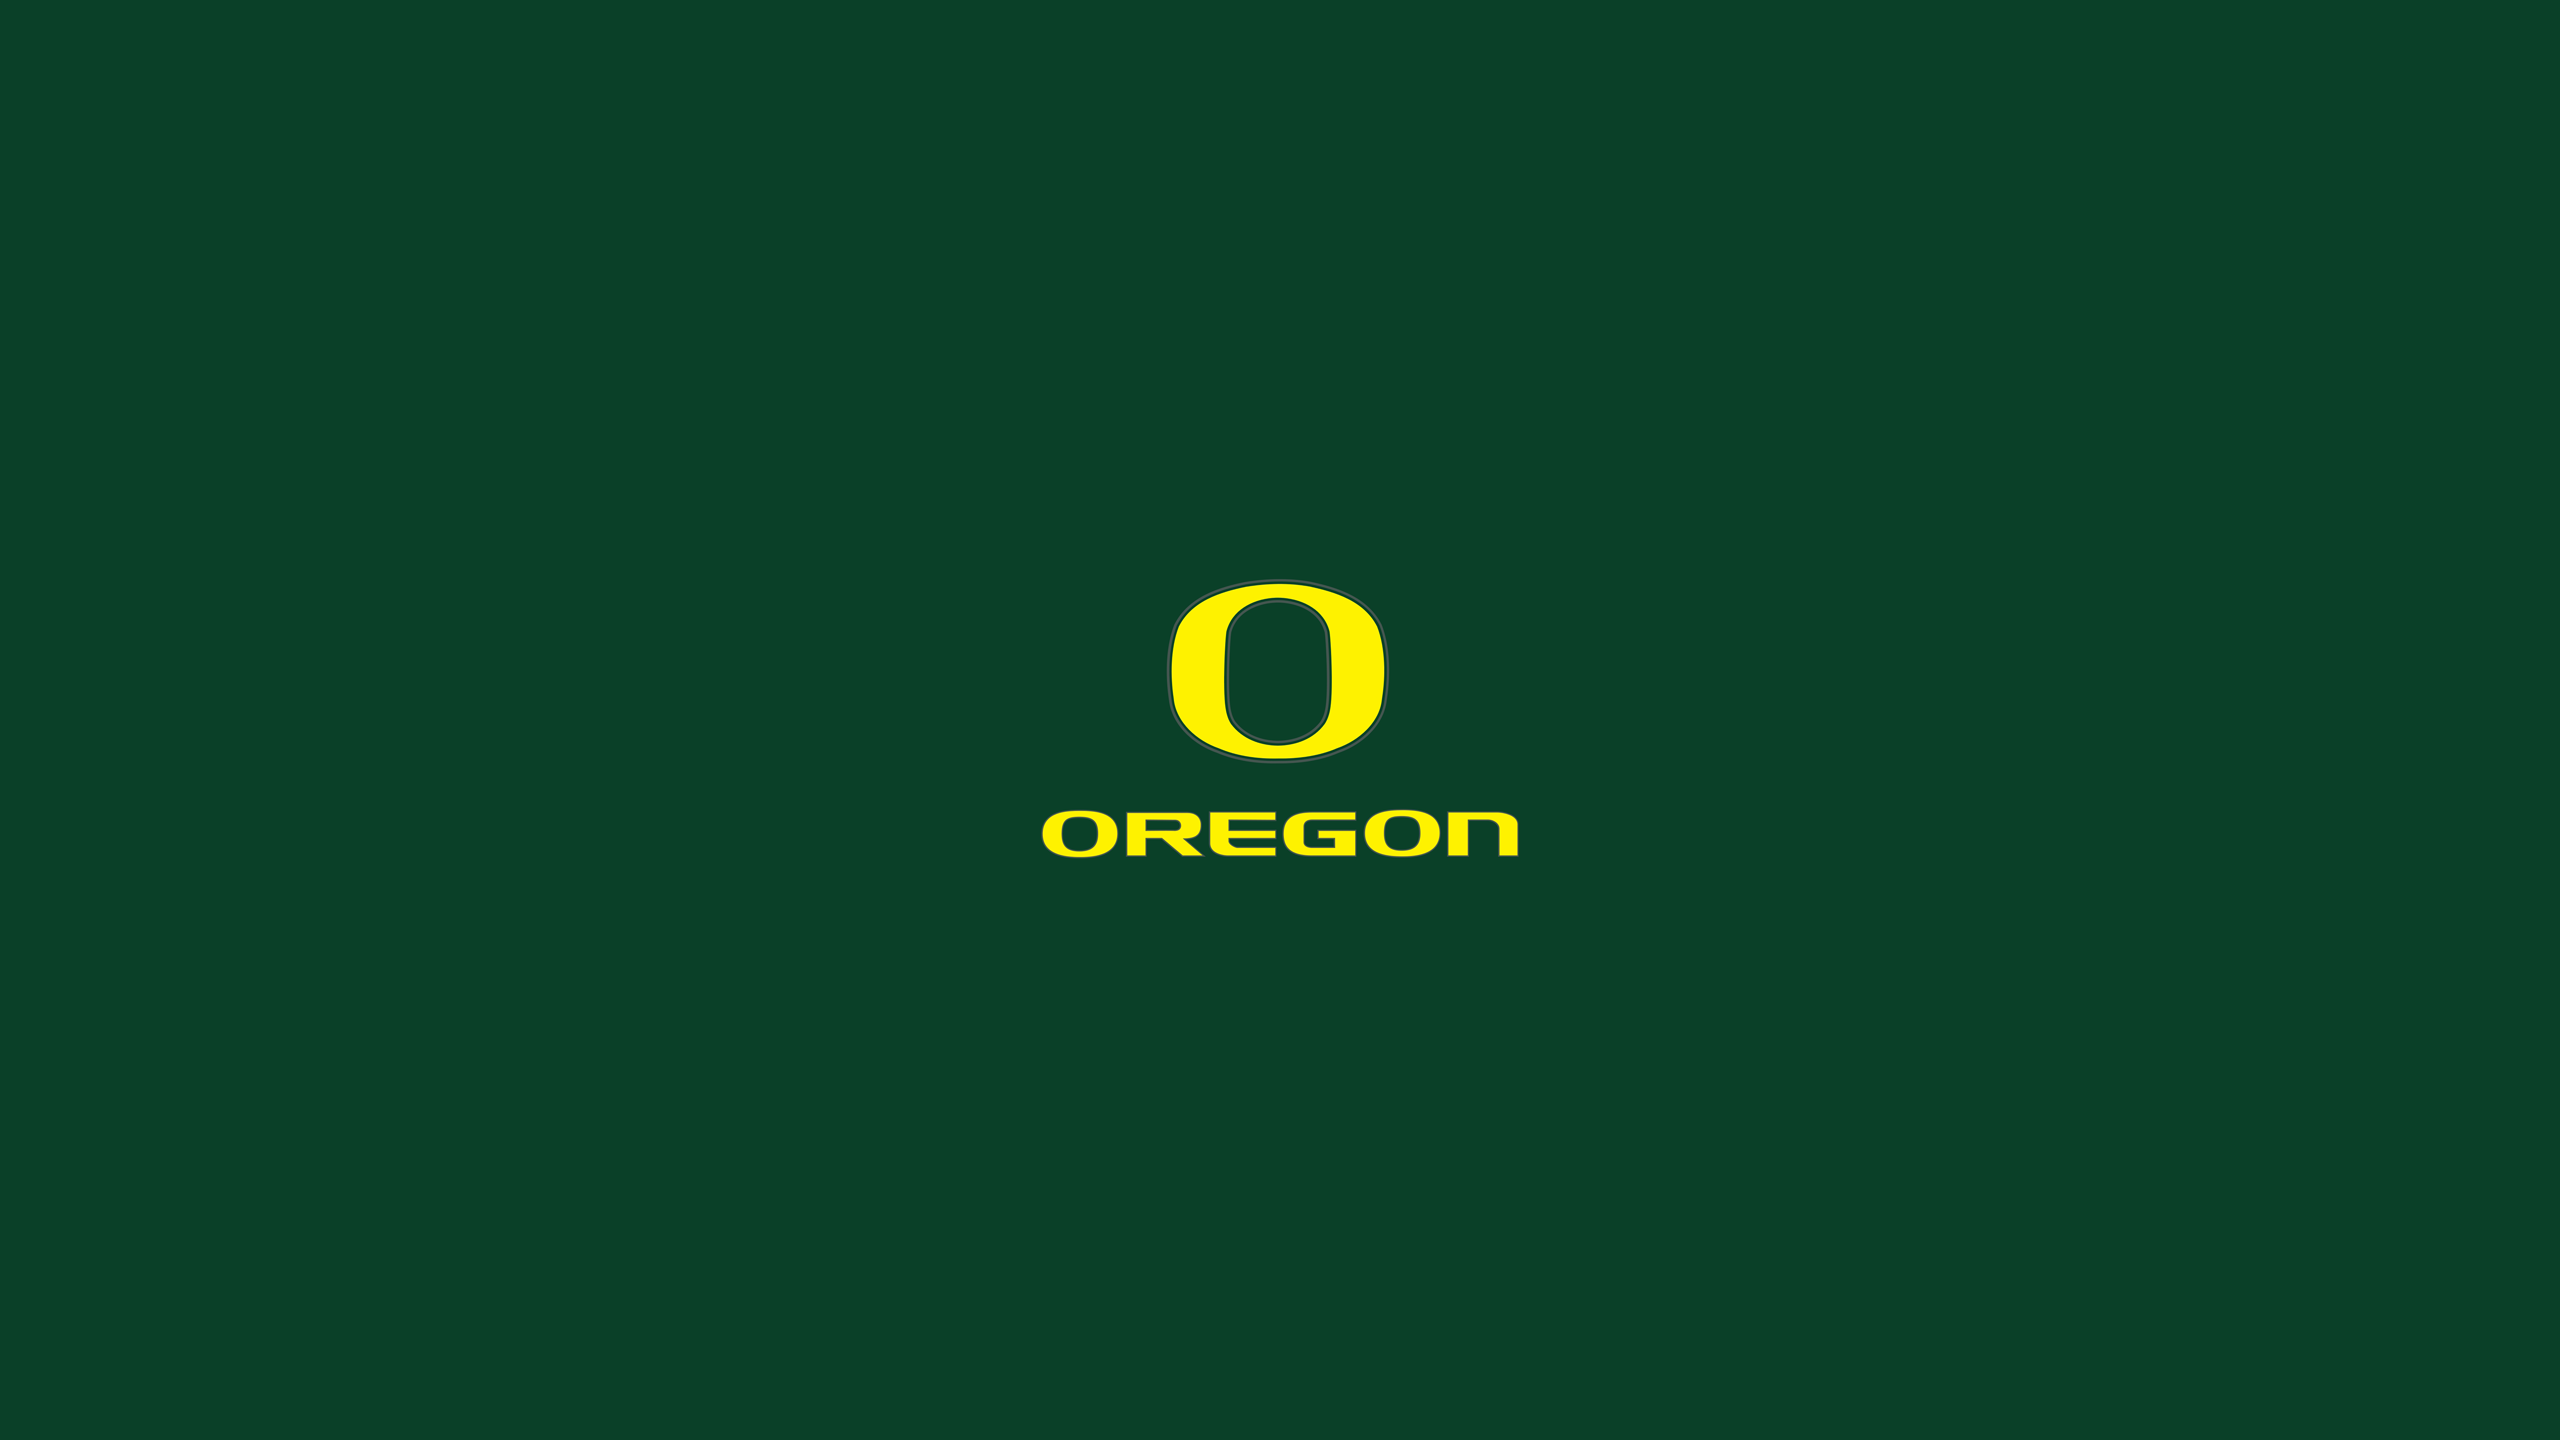 Download Oregon Ducks Logo Wallpaper 8295 2560x1440 px High resolution